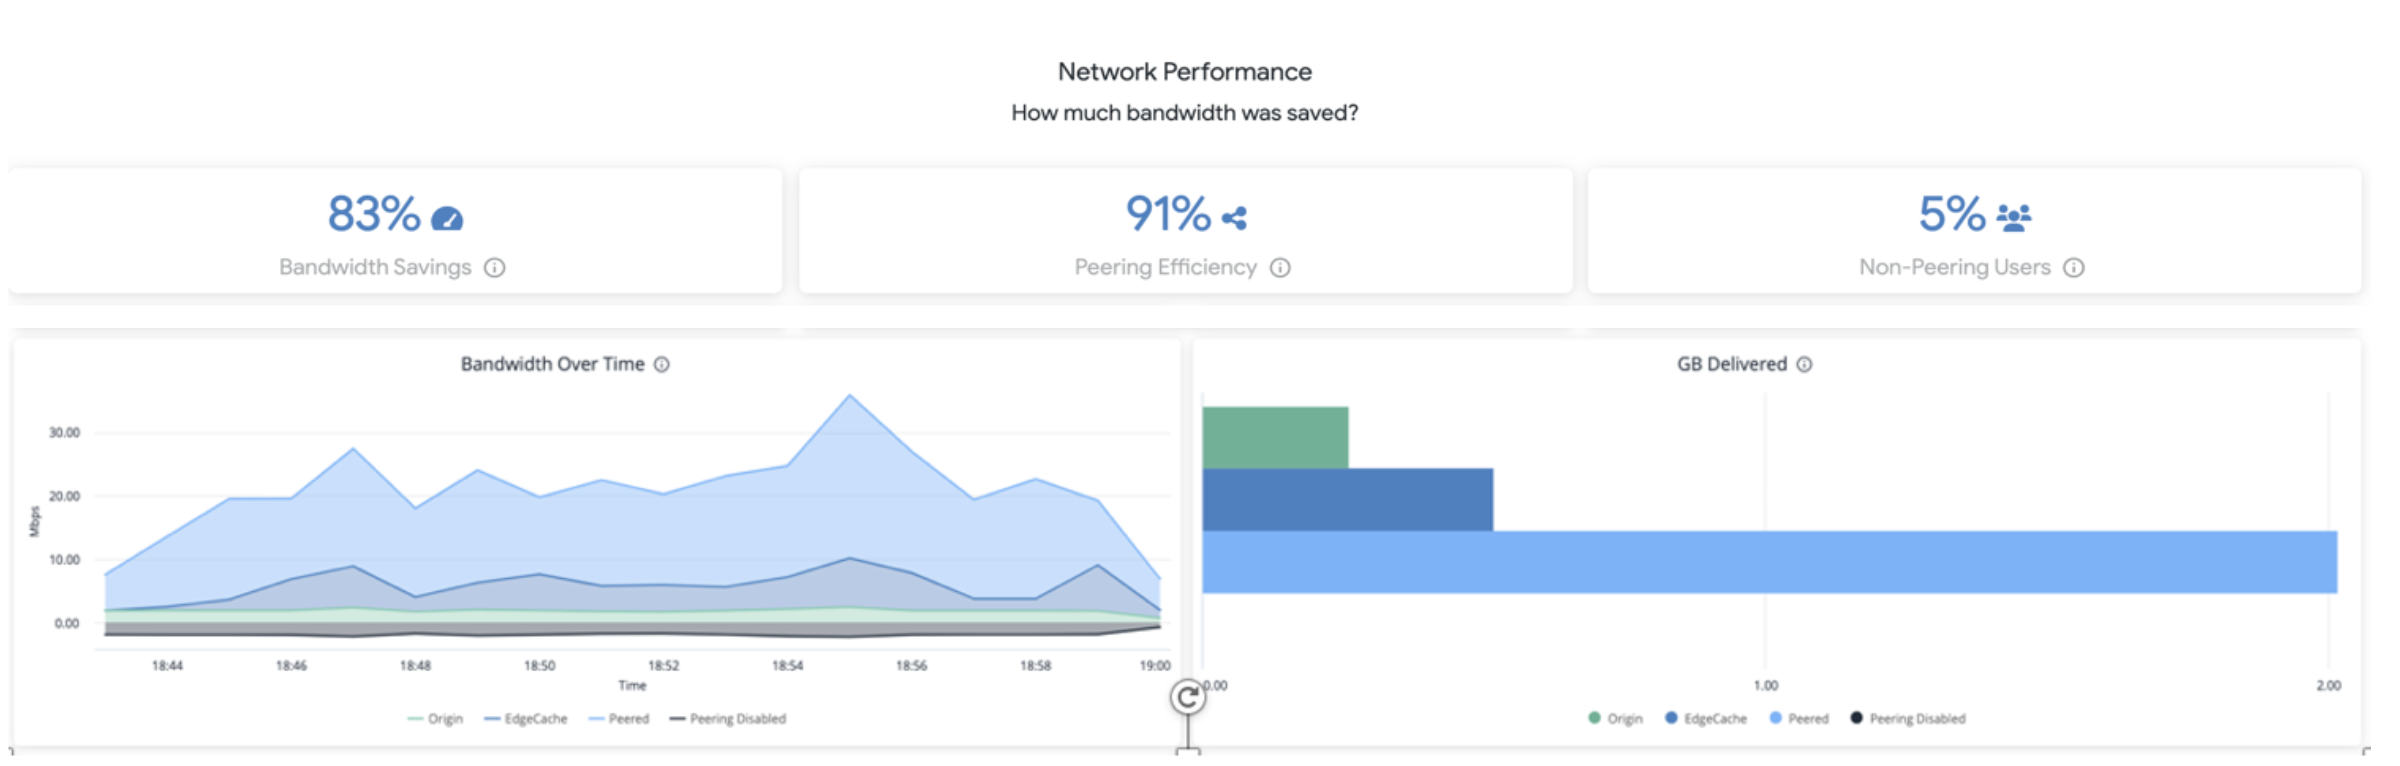 Network Performance image